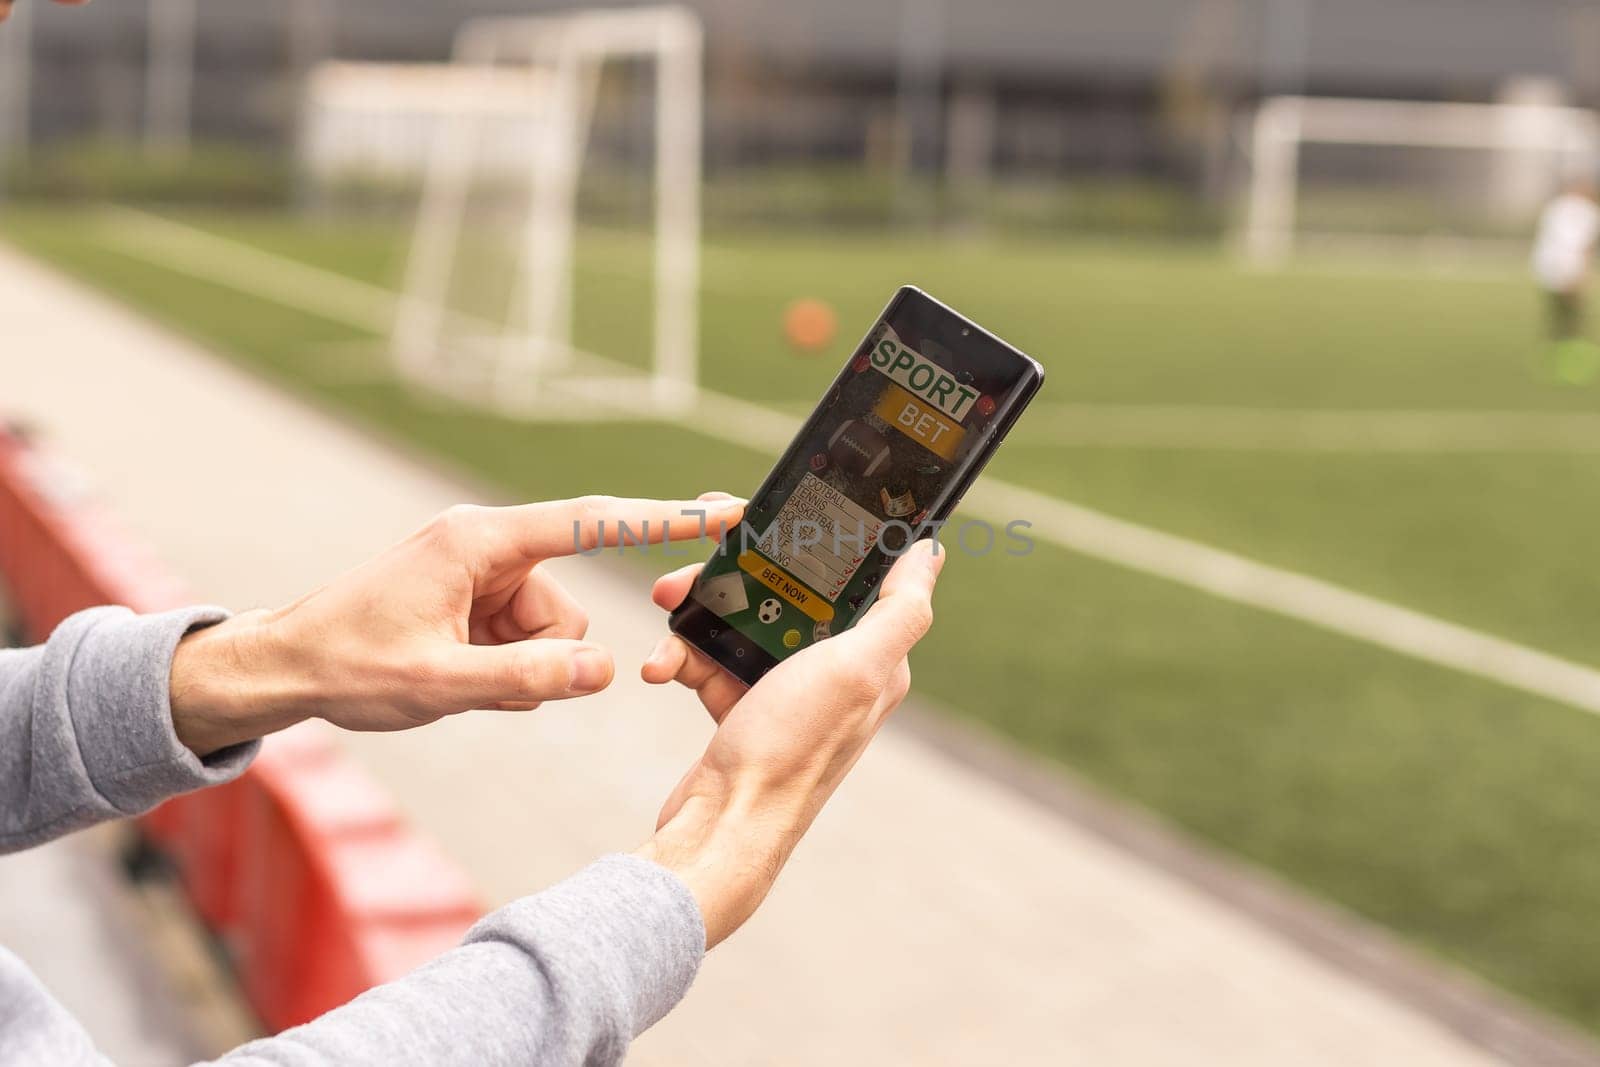 betting bet sport phone gamble over shoulder soccer live website concept